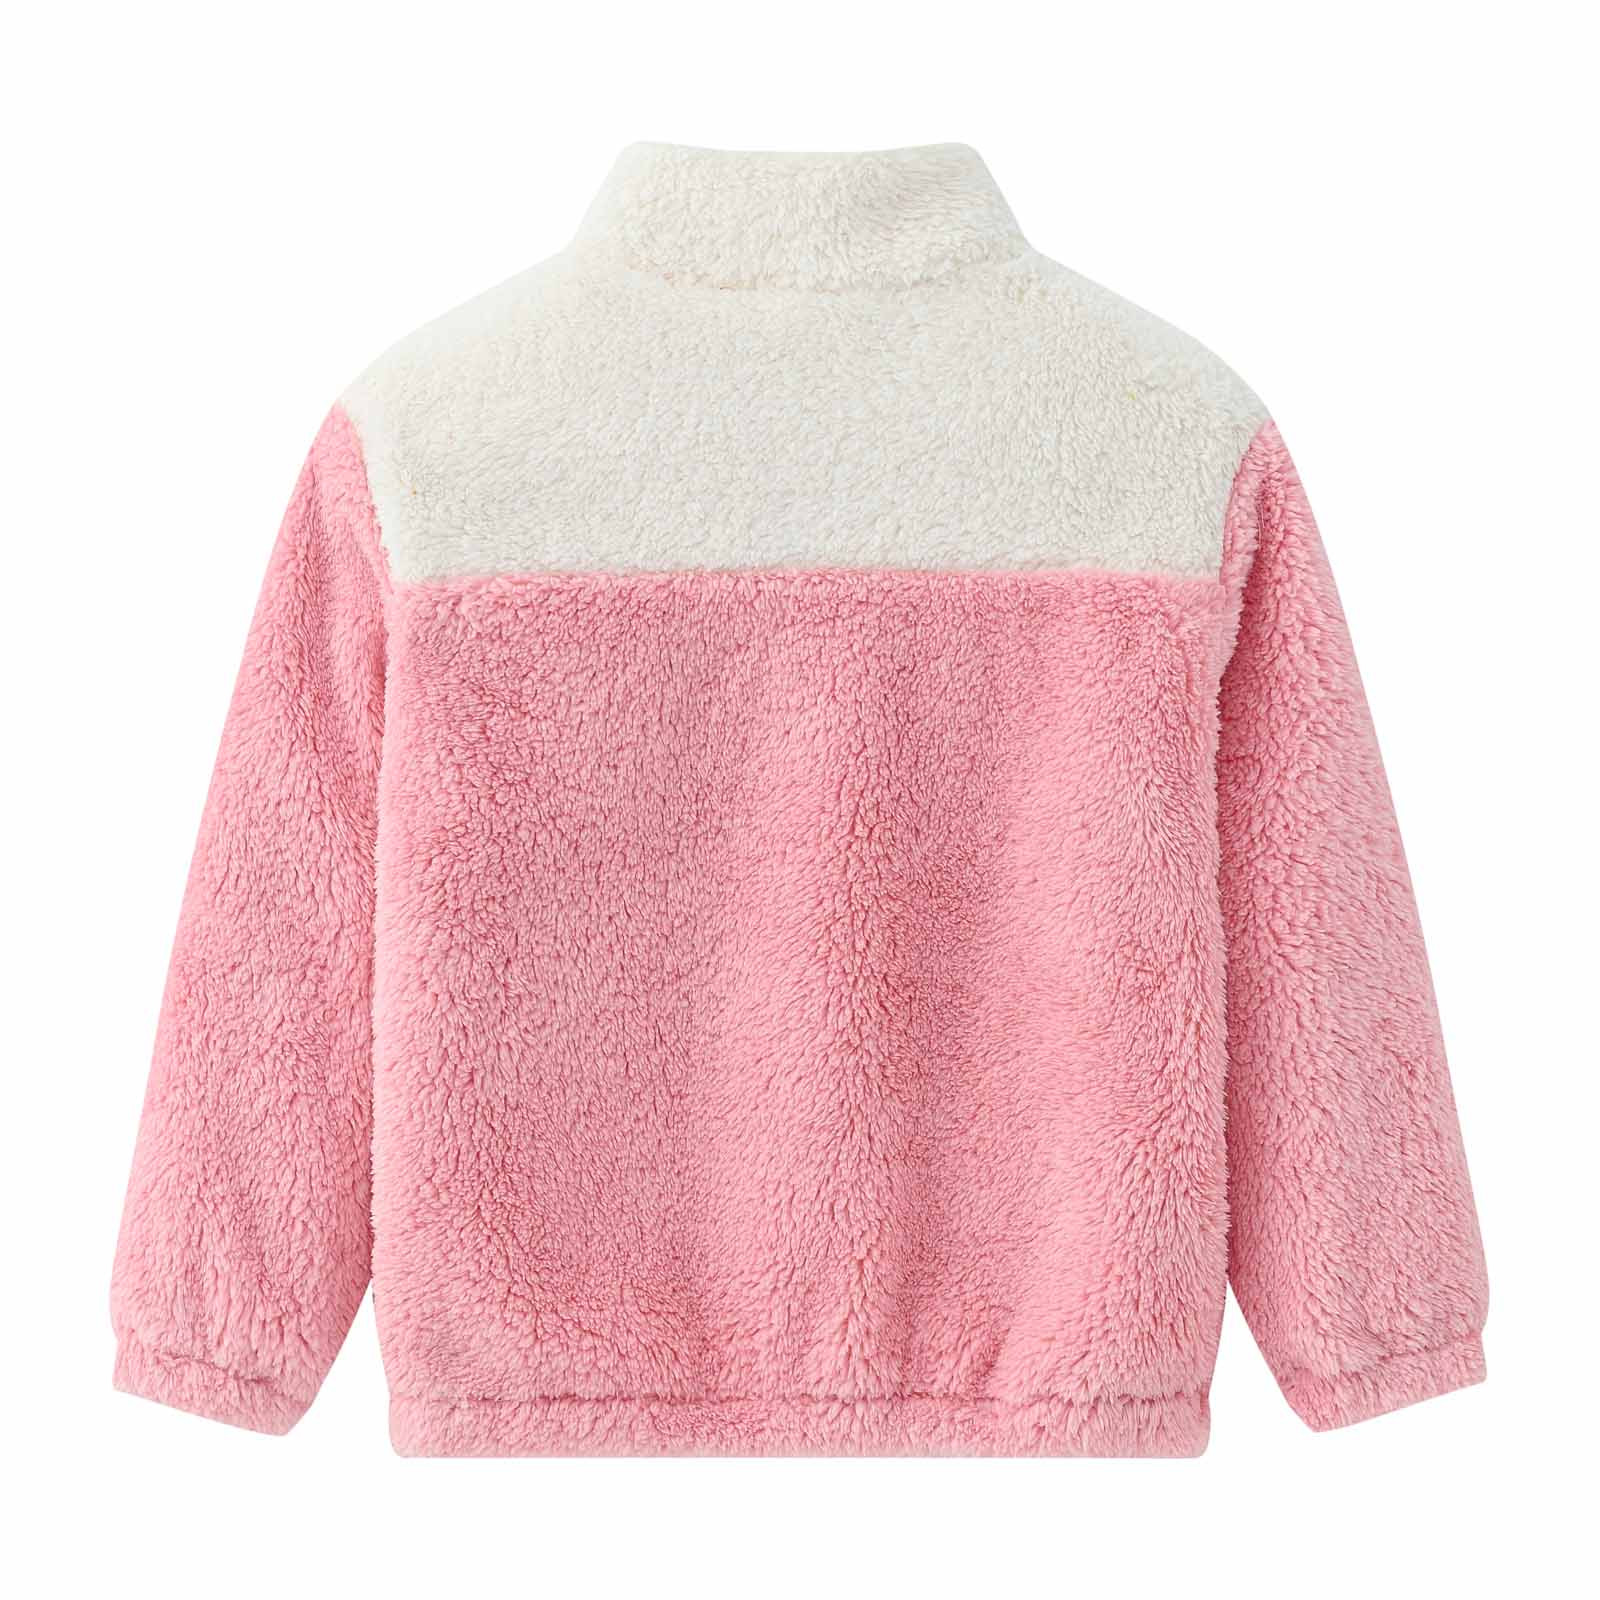 YYDGH Girls Zipper Jacket Fuzzy Sweatshirt Long Sleeve Casual Cozy Fleece Sherpa Outwear Coat Full-Zip Rainbow Jackets(Pink,2-3 Years) - image 5 of 8